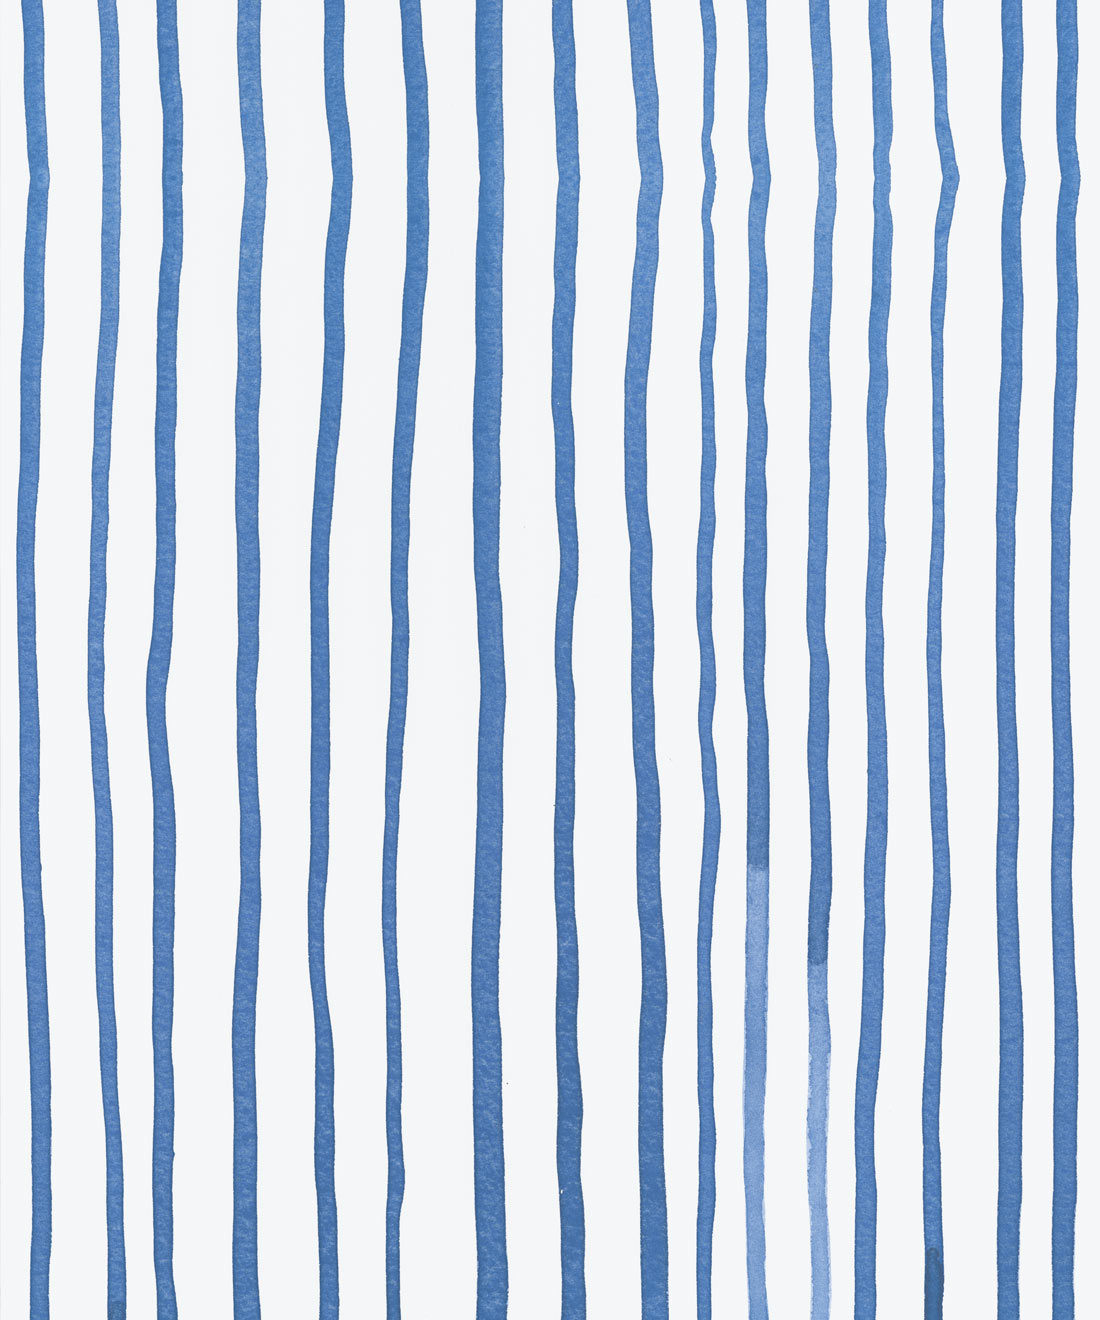 Download Stripes Striped Diagonal Royalty-Free Stock Illustration